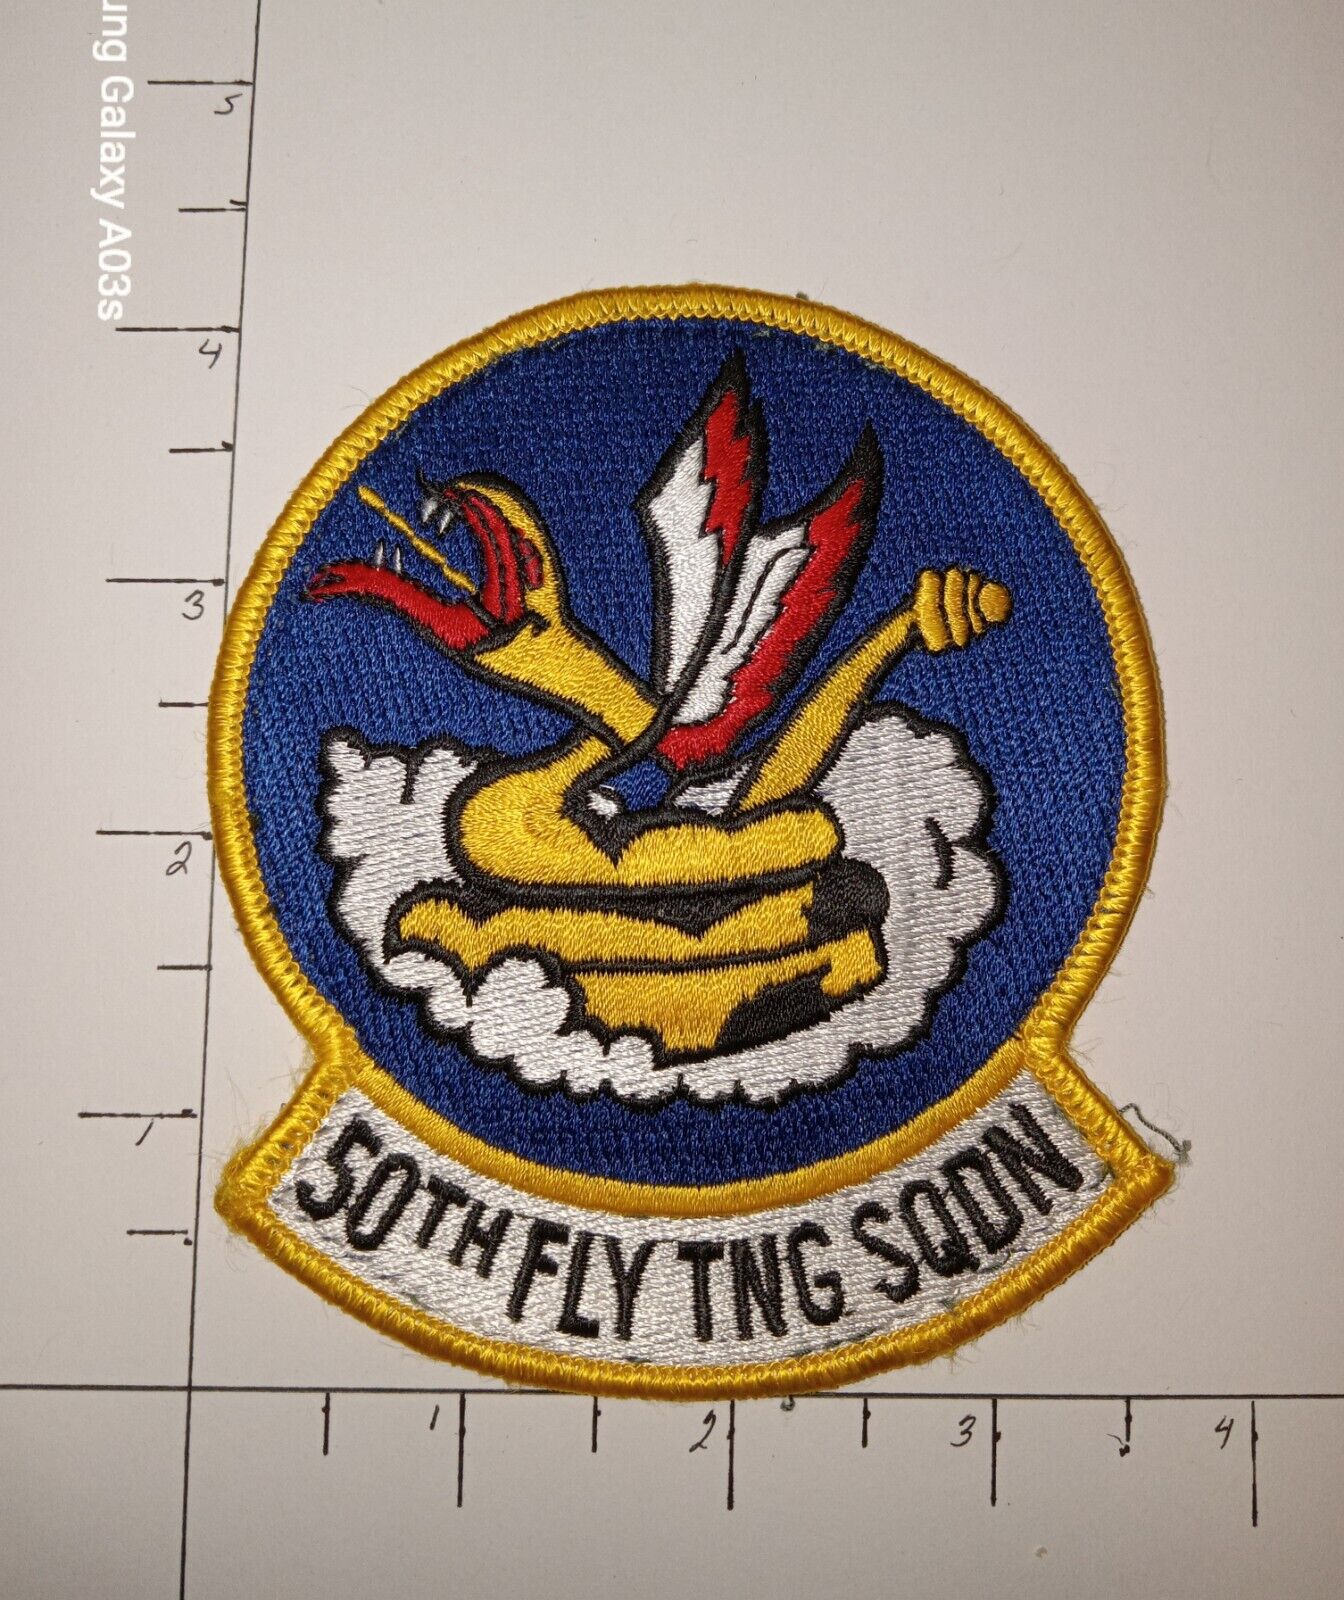 USAF 50th FLYING TRAINING SQUADRON